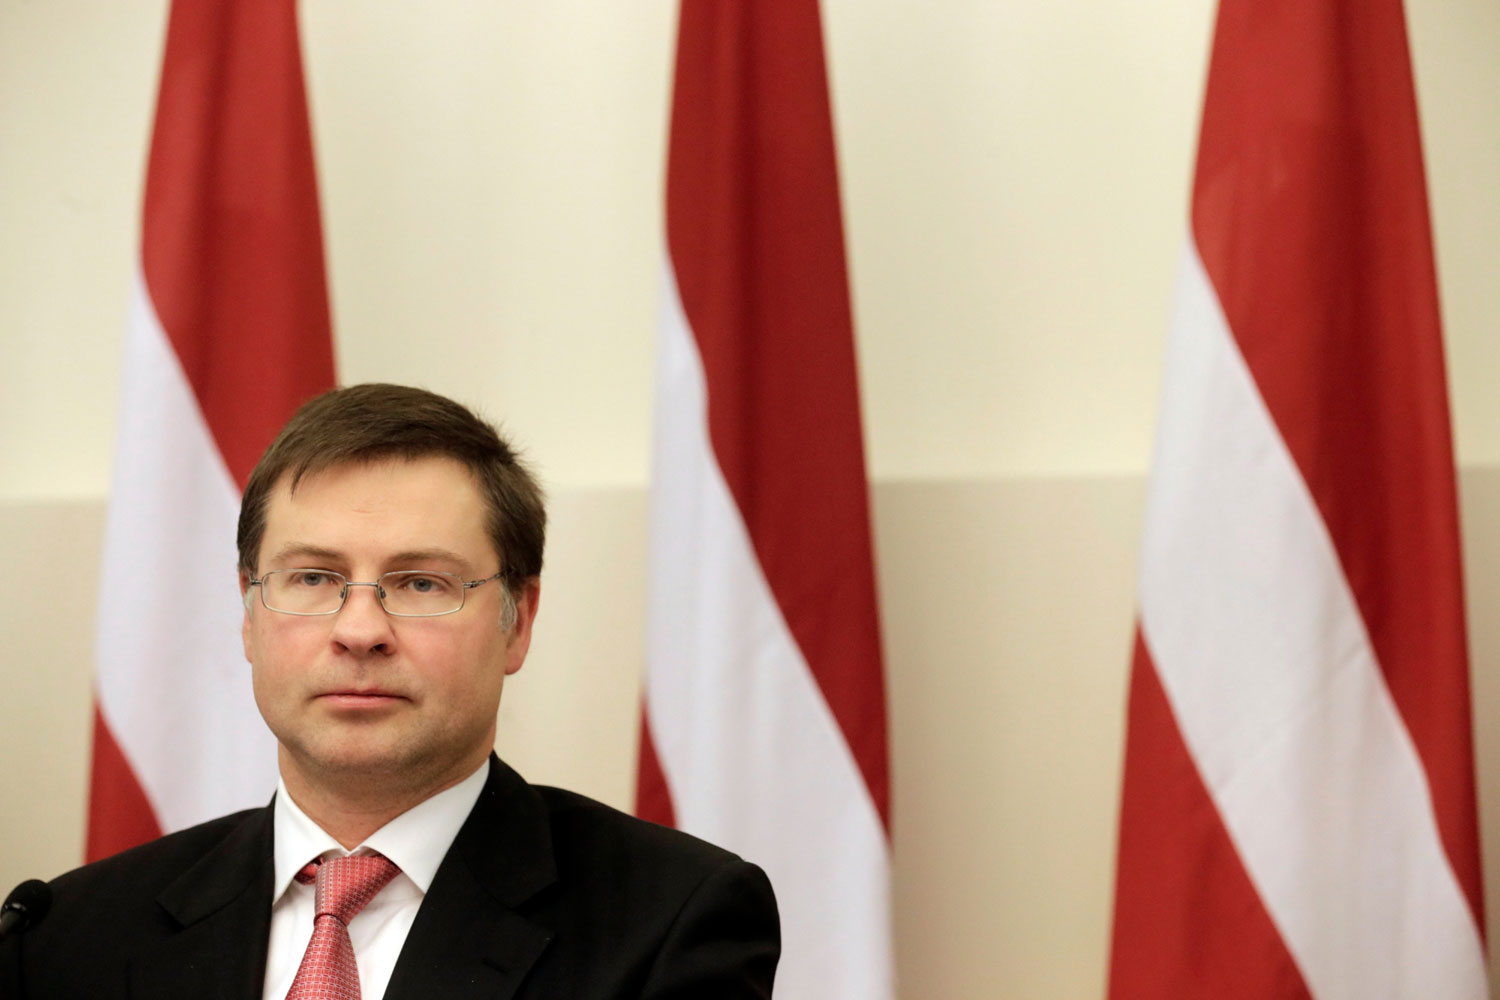 Dimite el primer ministro letón, Valdis Dombrovskis